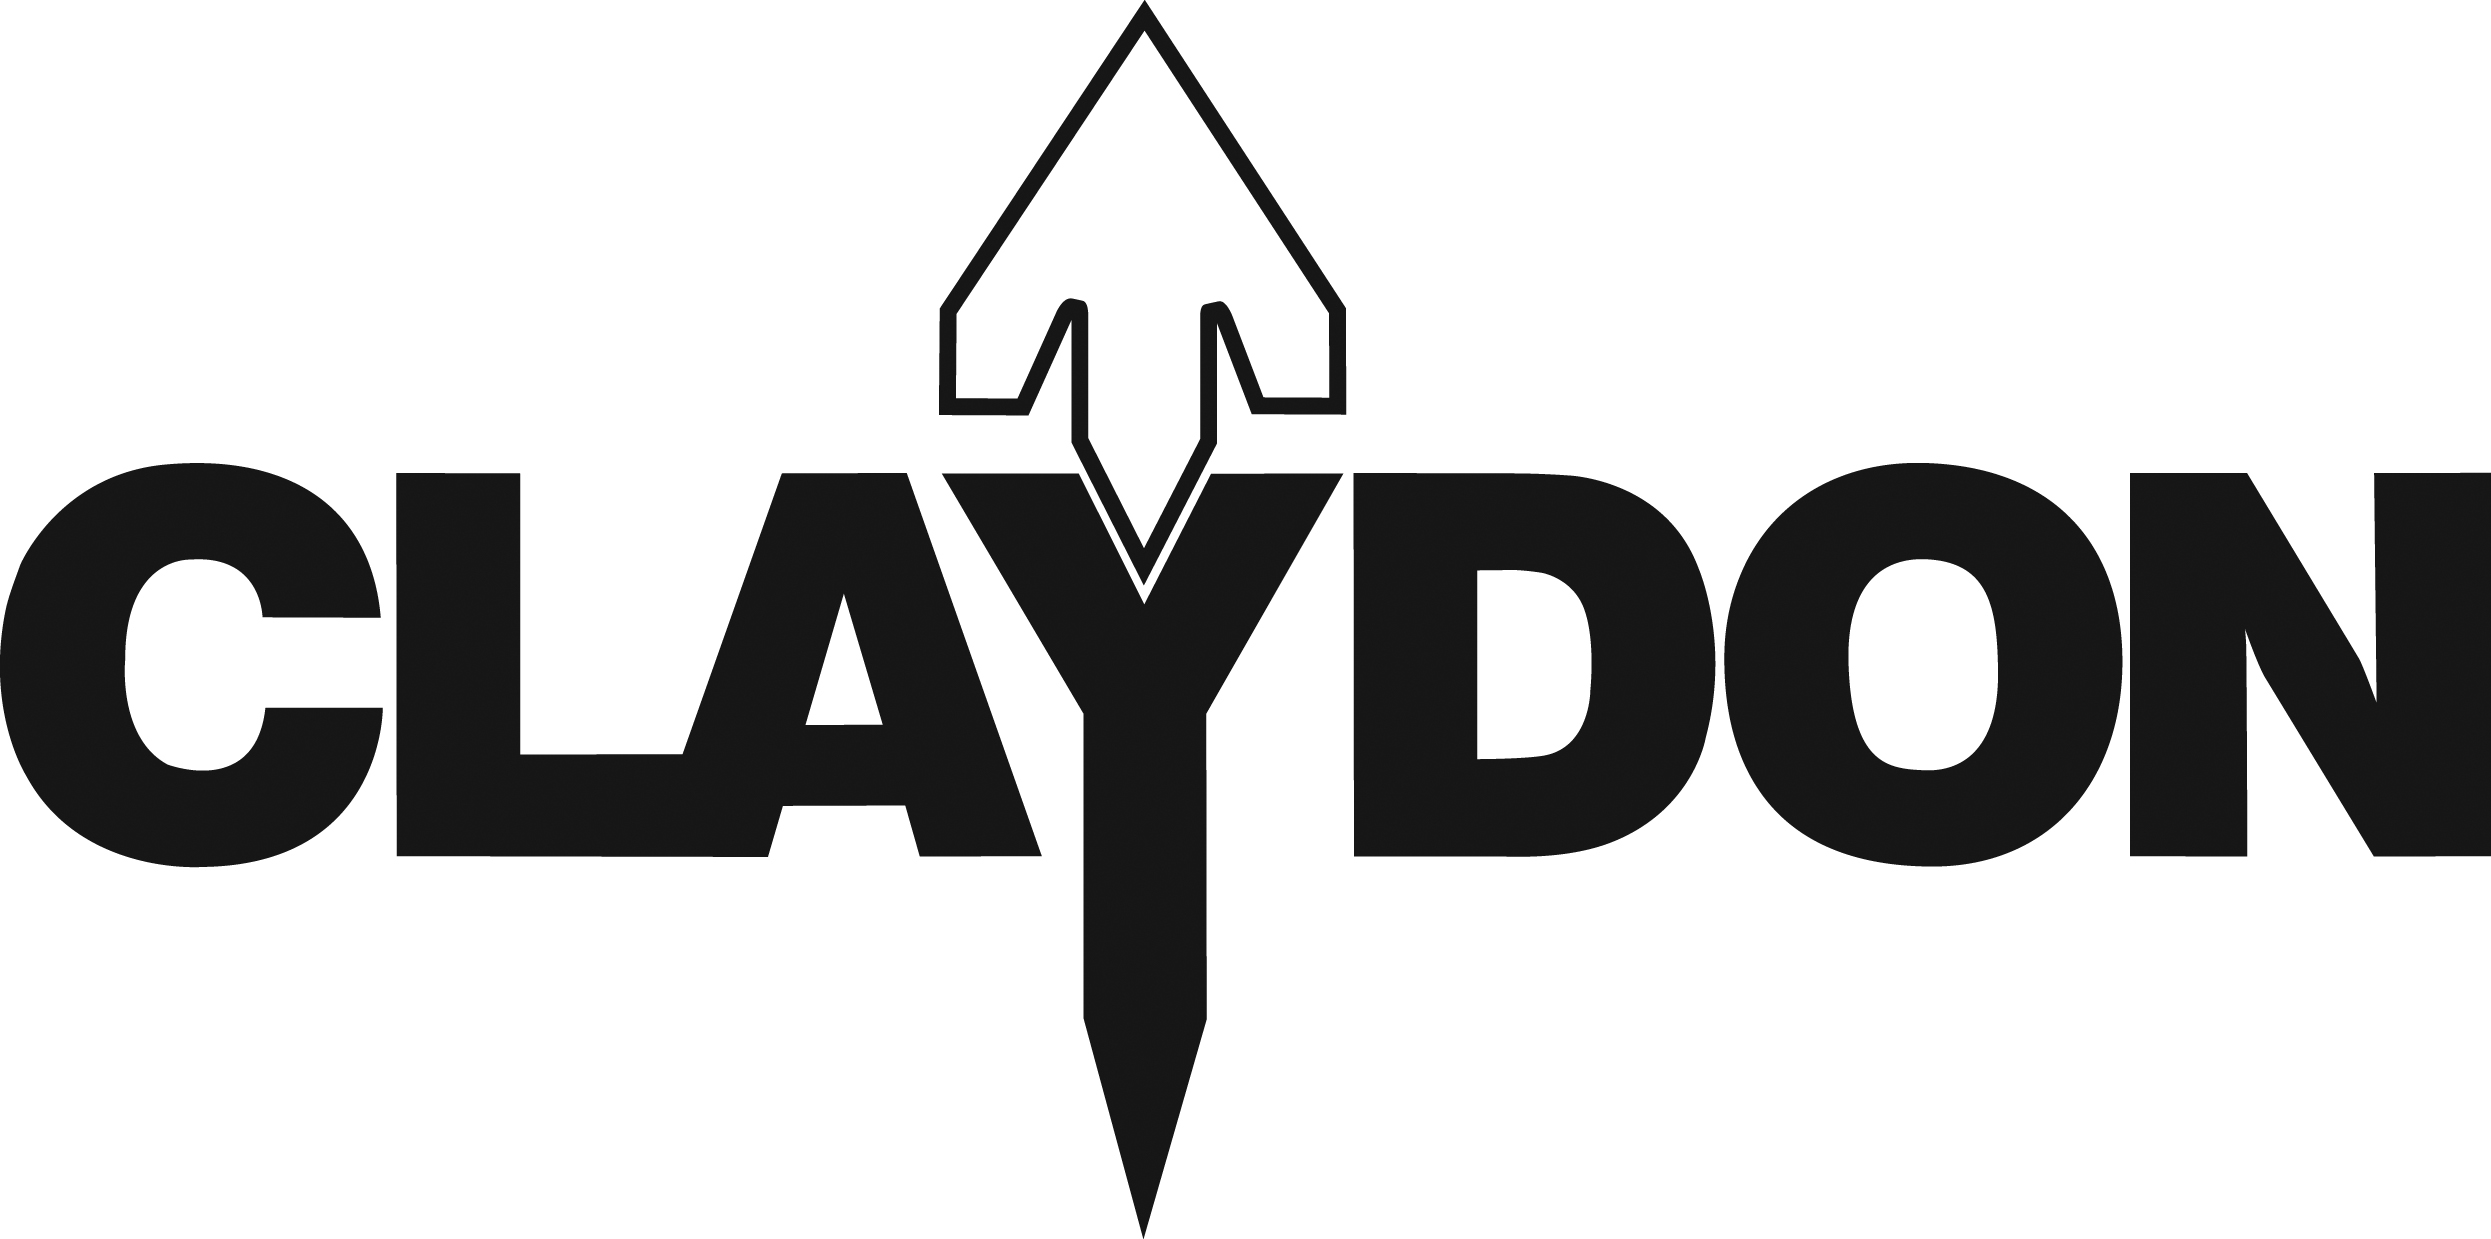 New claydonvector logo